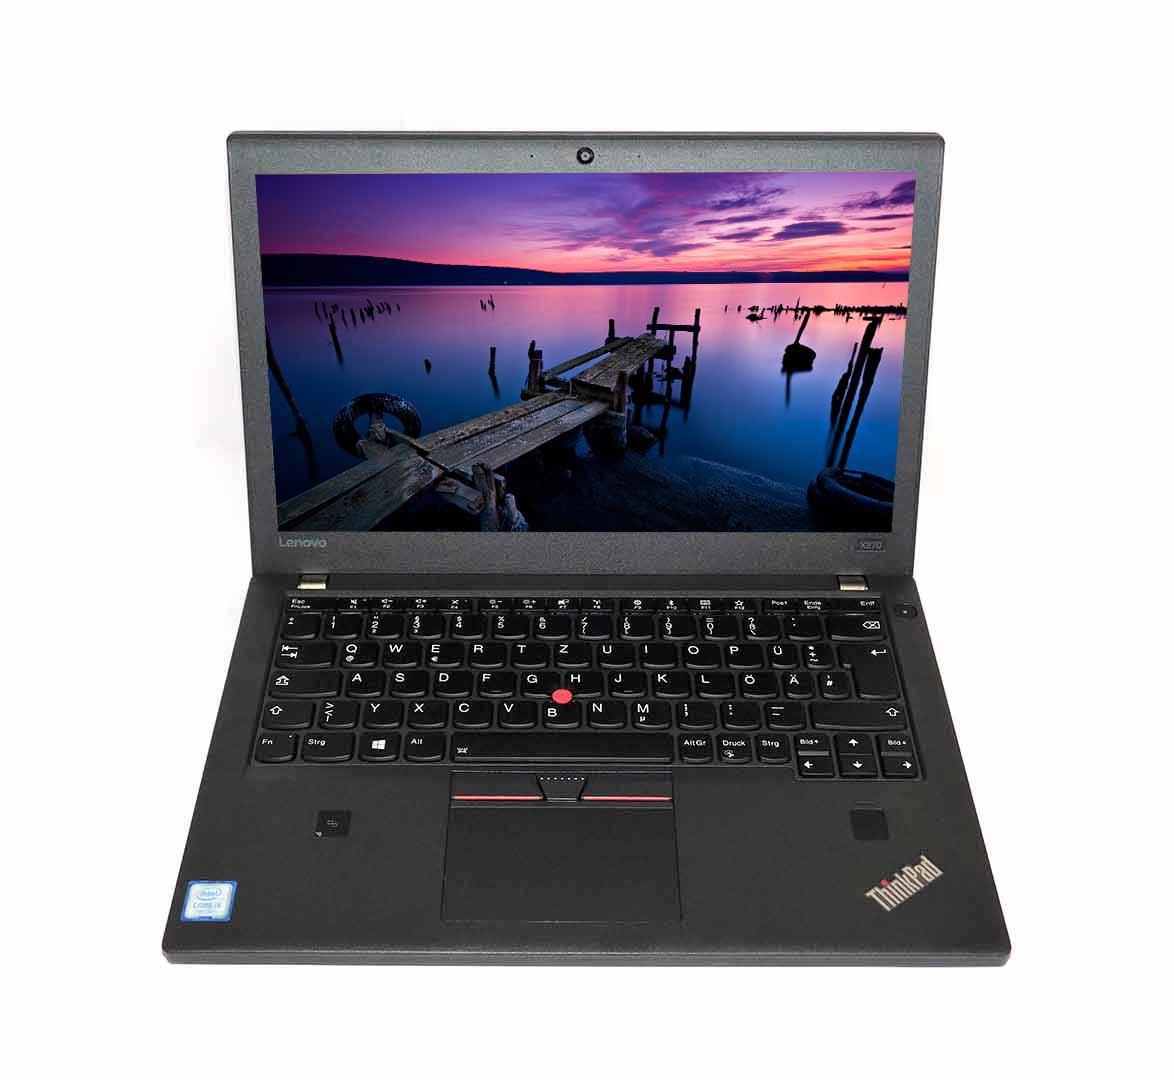 Lenovo X270 Business Laptop, Intel Core i7-7th Generation CPU, 8GB RAM, 256GB SSD, 12.5 inch Display, Windows 10 Pro, Refurbished Laptop